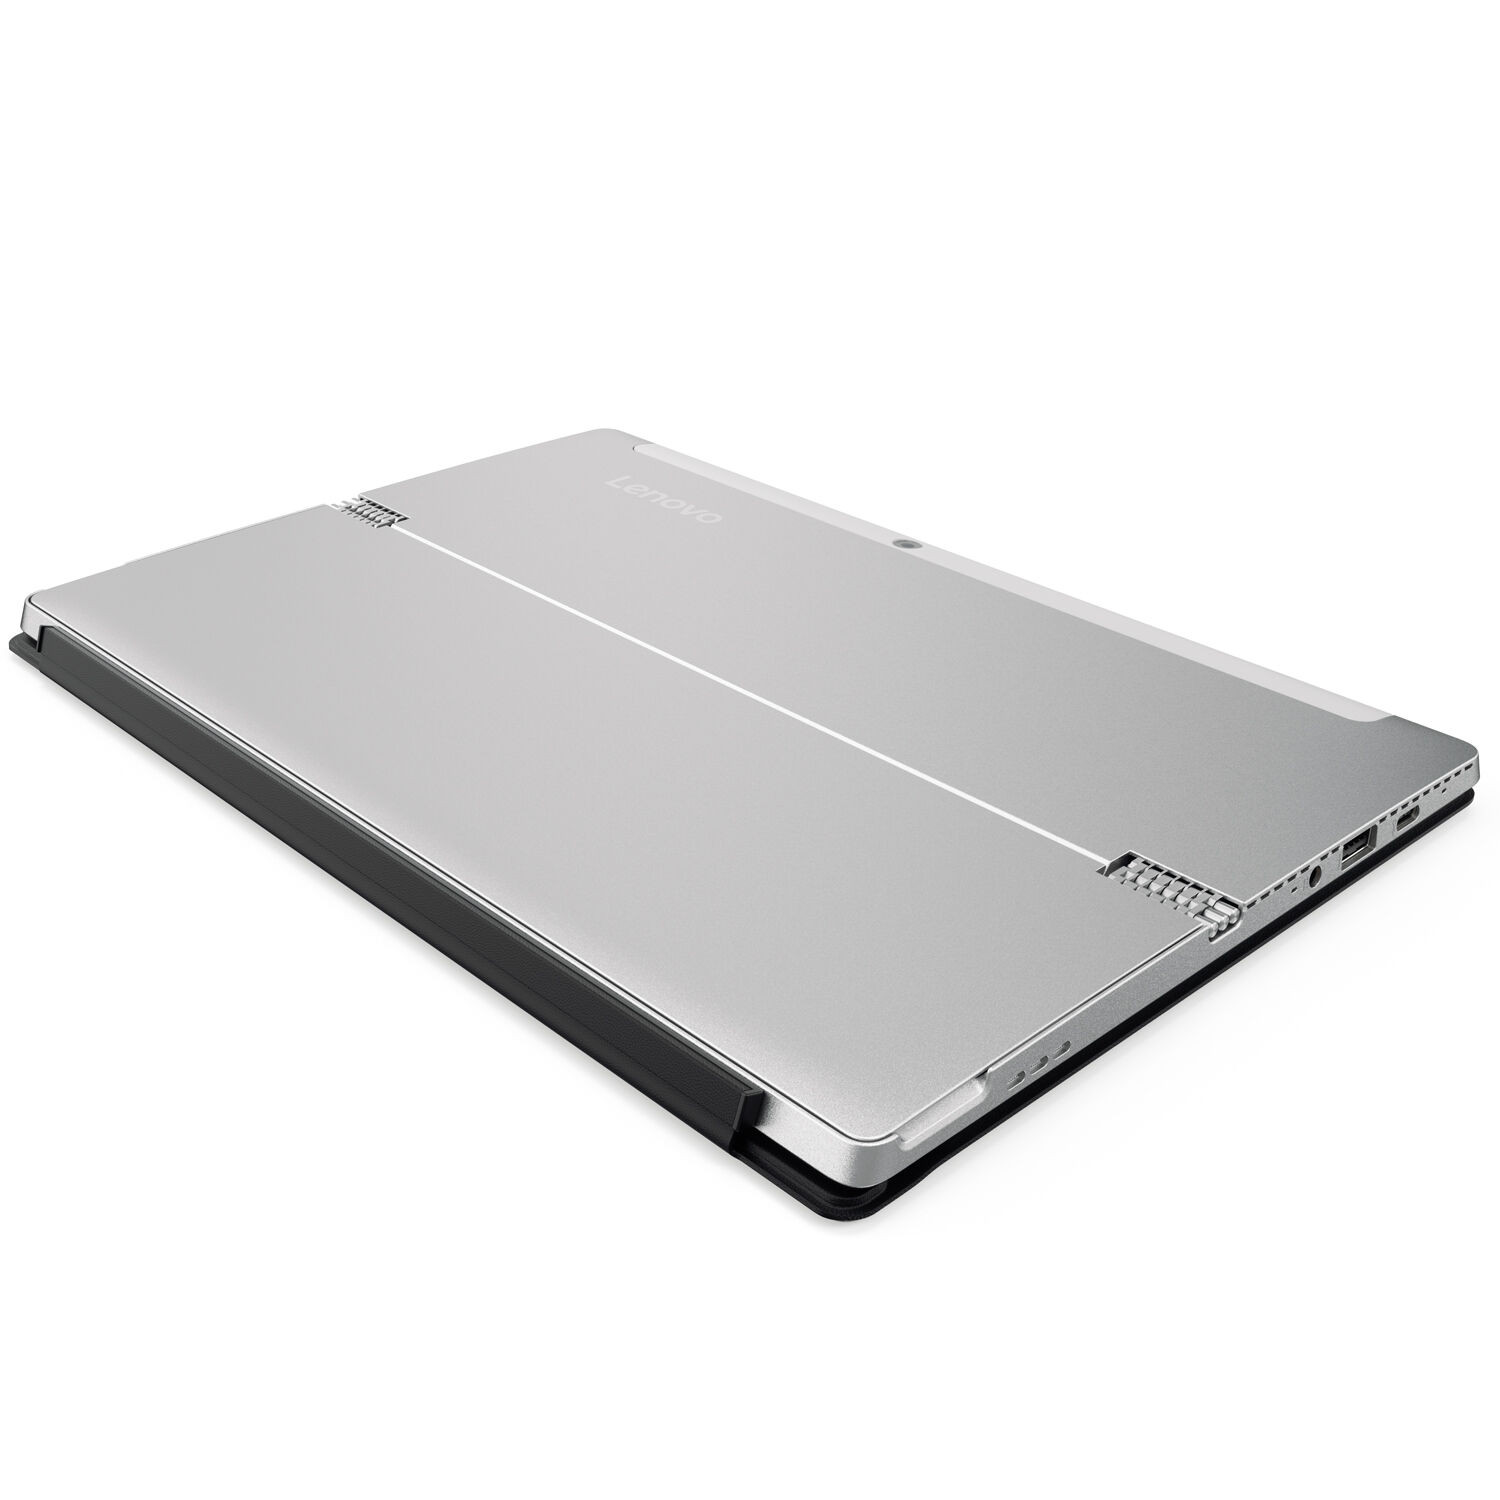 Lenovo IdeaPad MIIX 510-12ISK 12.2" FHD IPS-Display Core i5-6200U 4GB RAM 128GB SSD Win 10 Pro